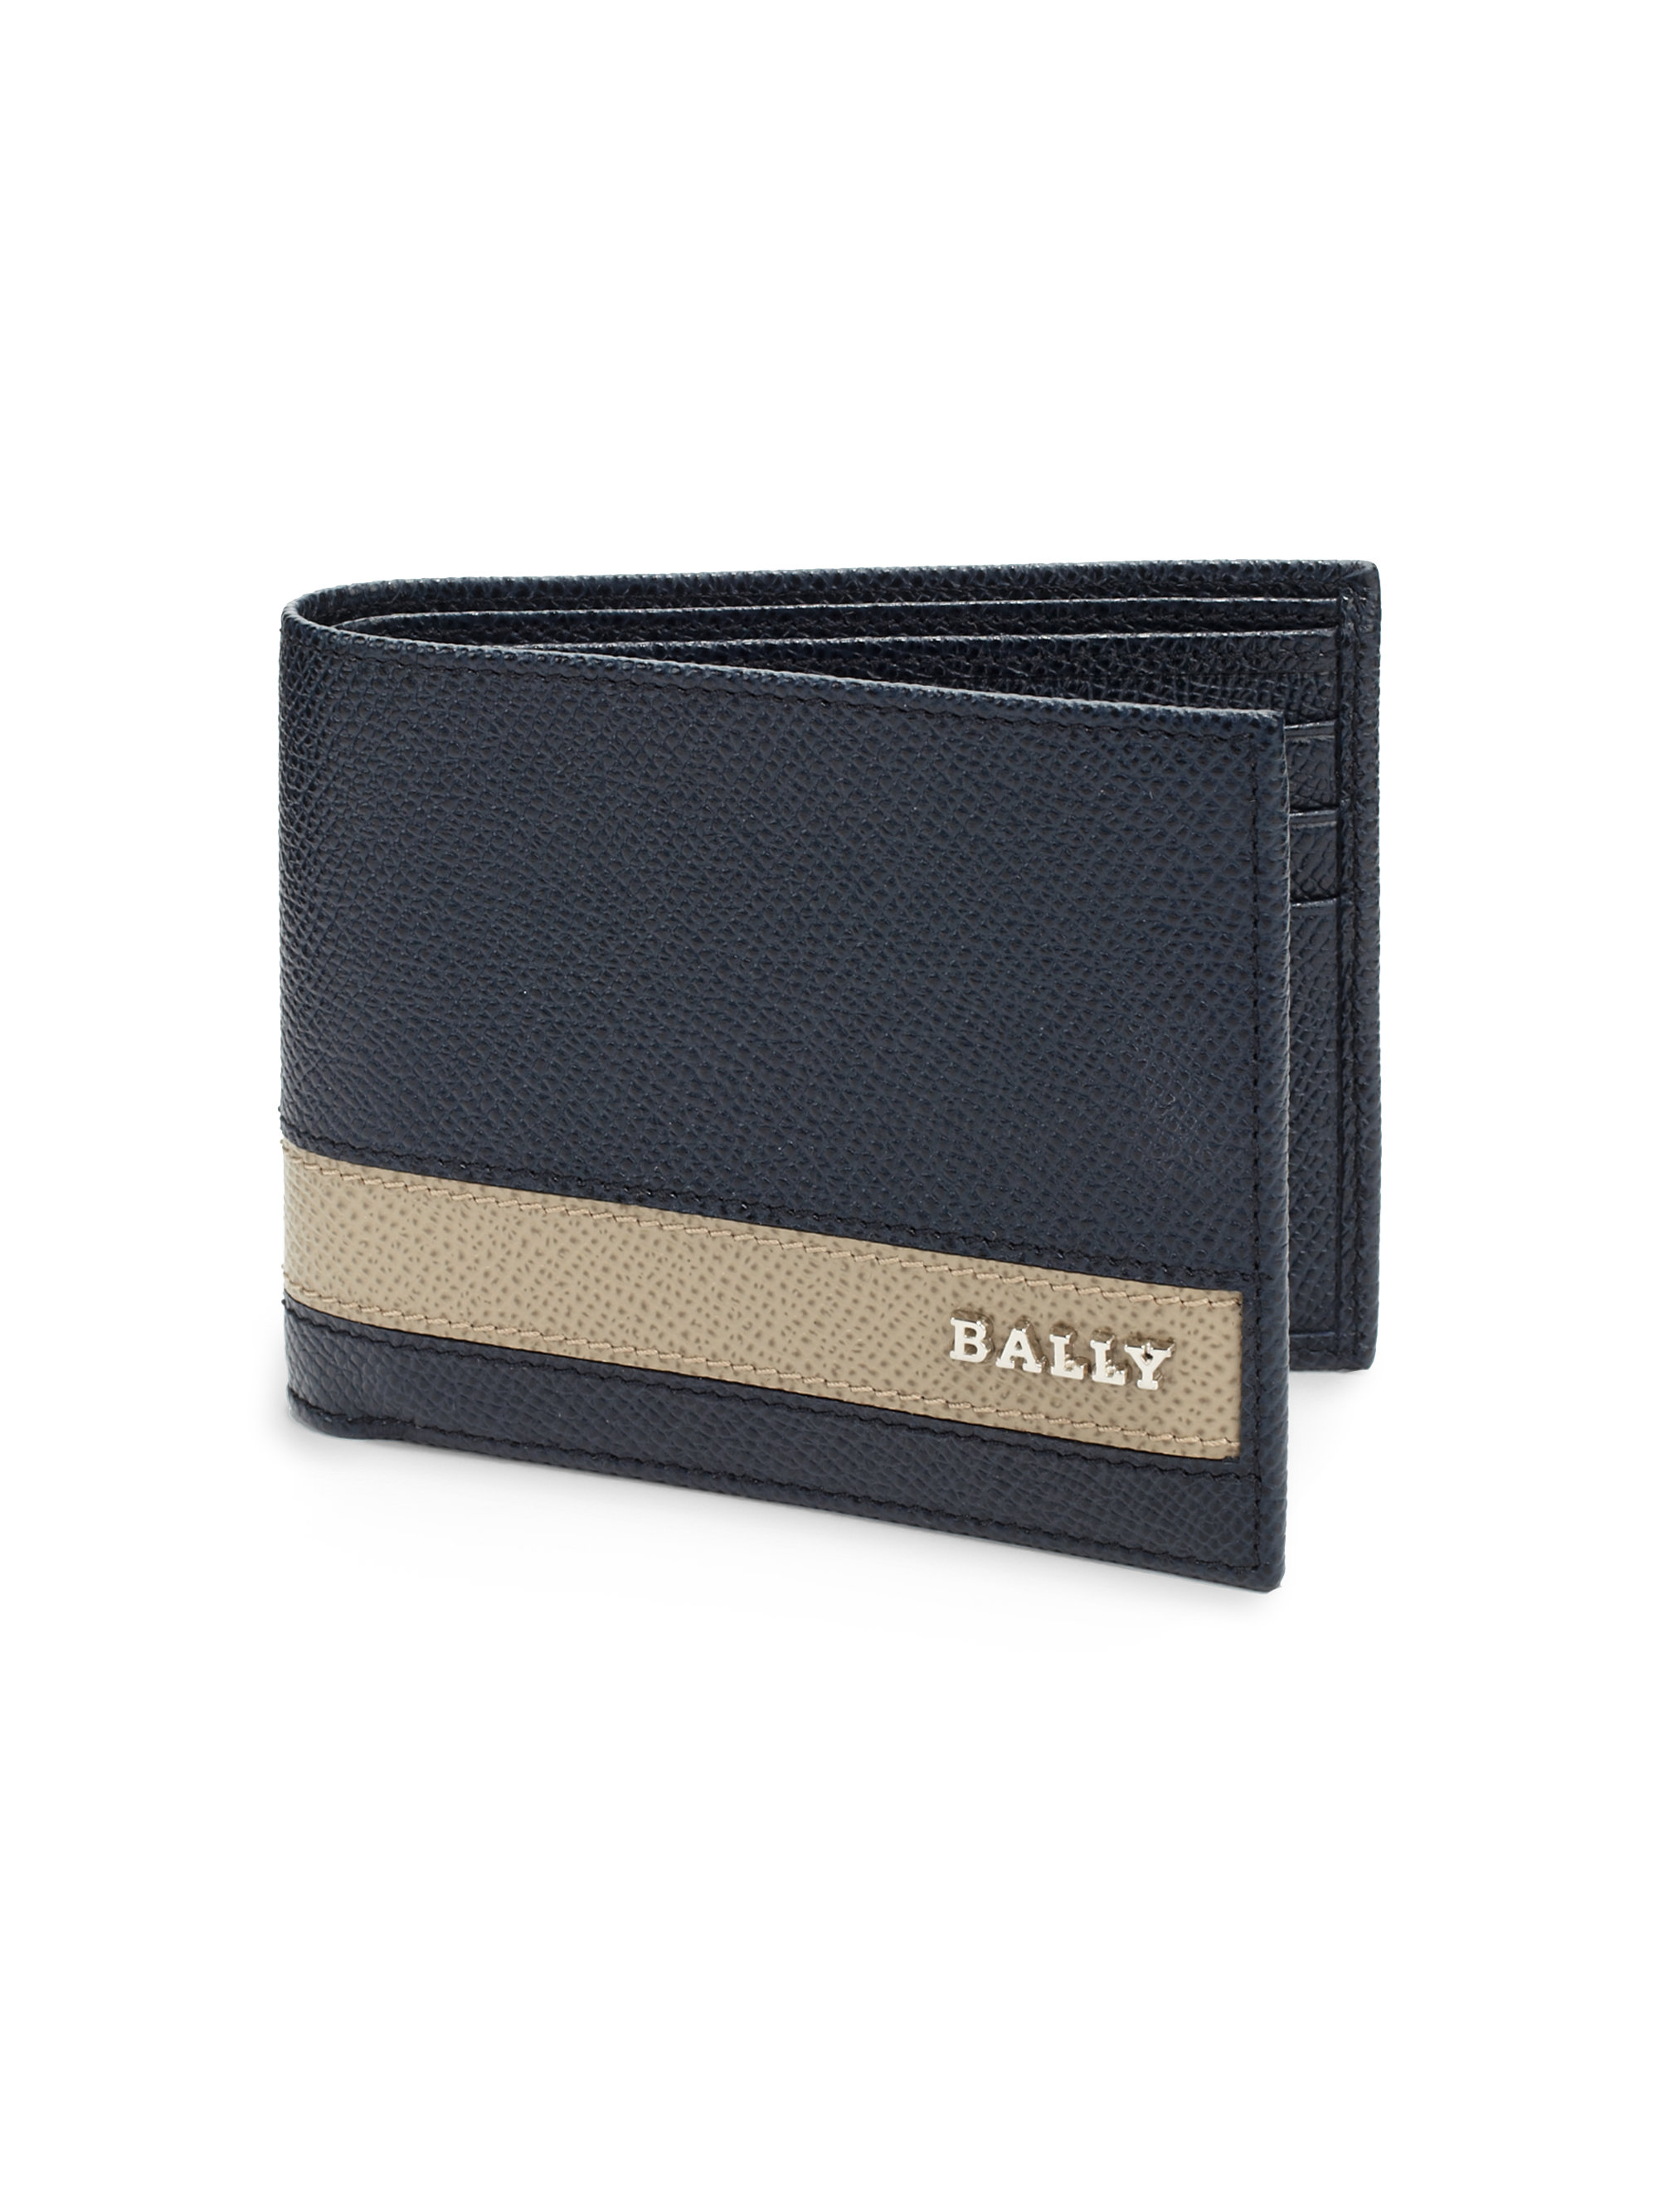 Bally Leather Bifold Wallet in Dark Blue (Blue) for Men - Lyst